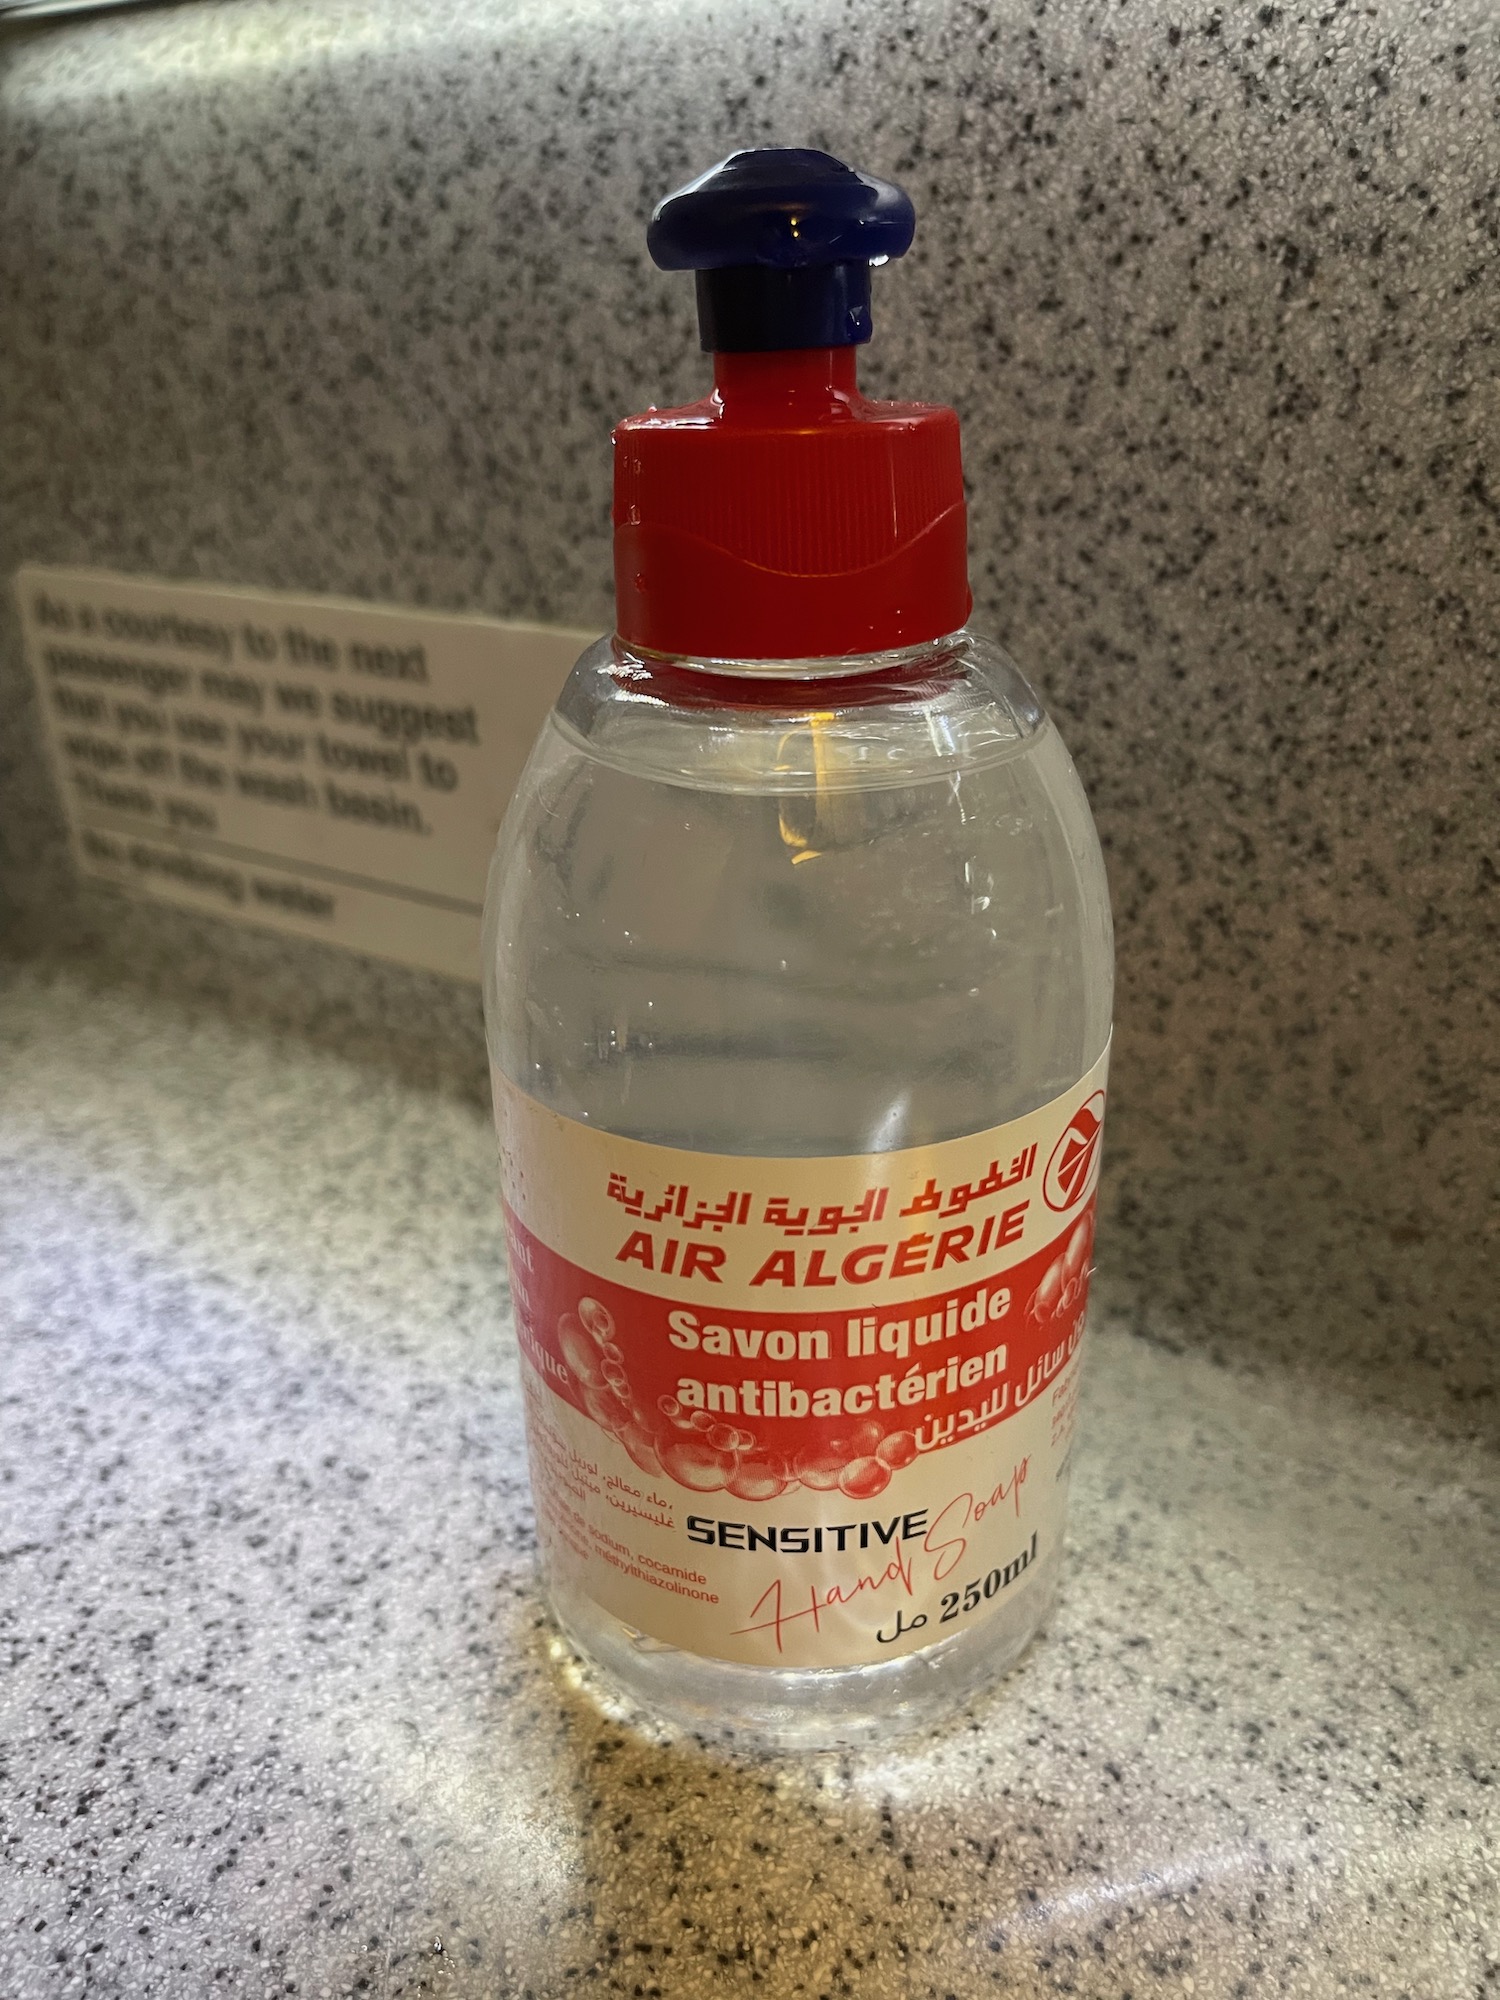 a bottle of liquid soap